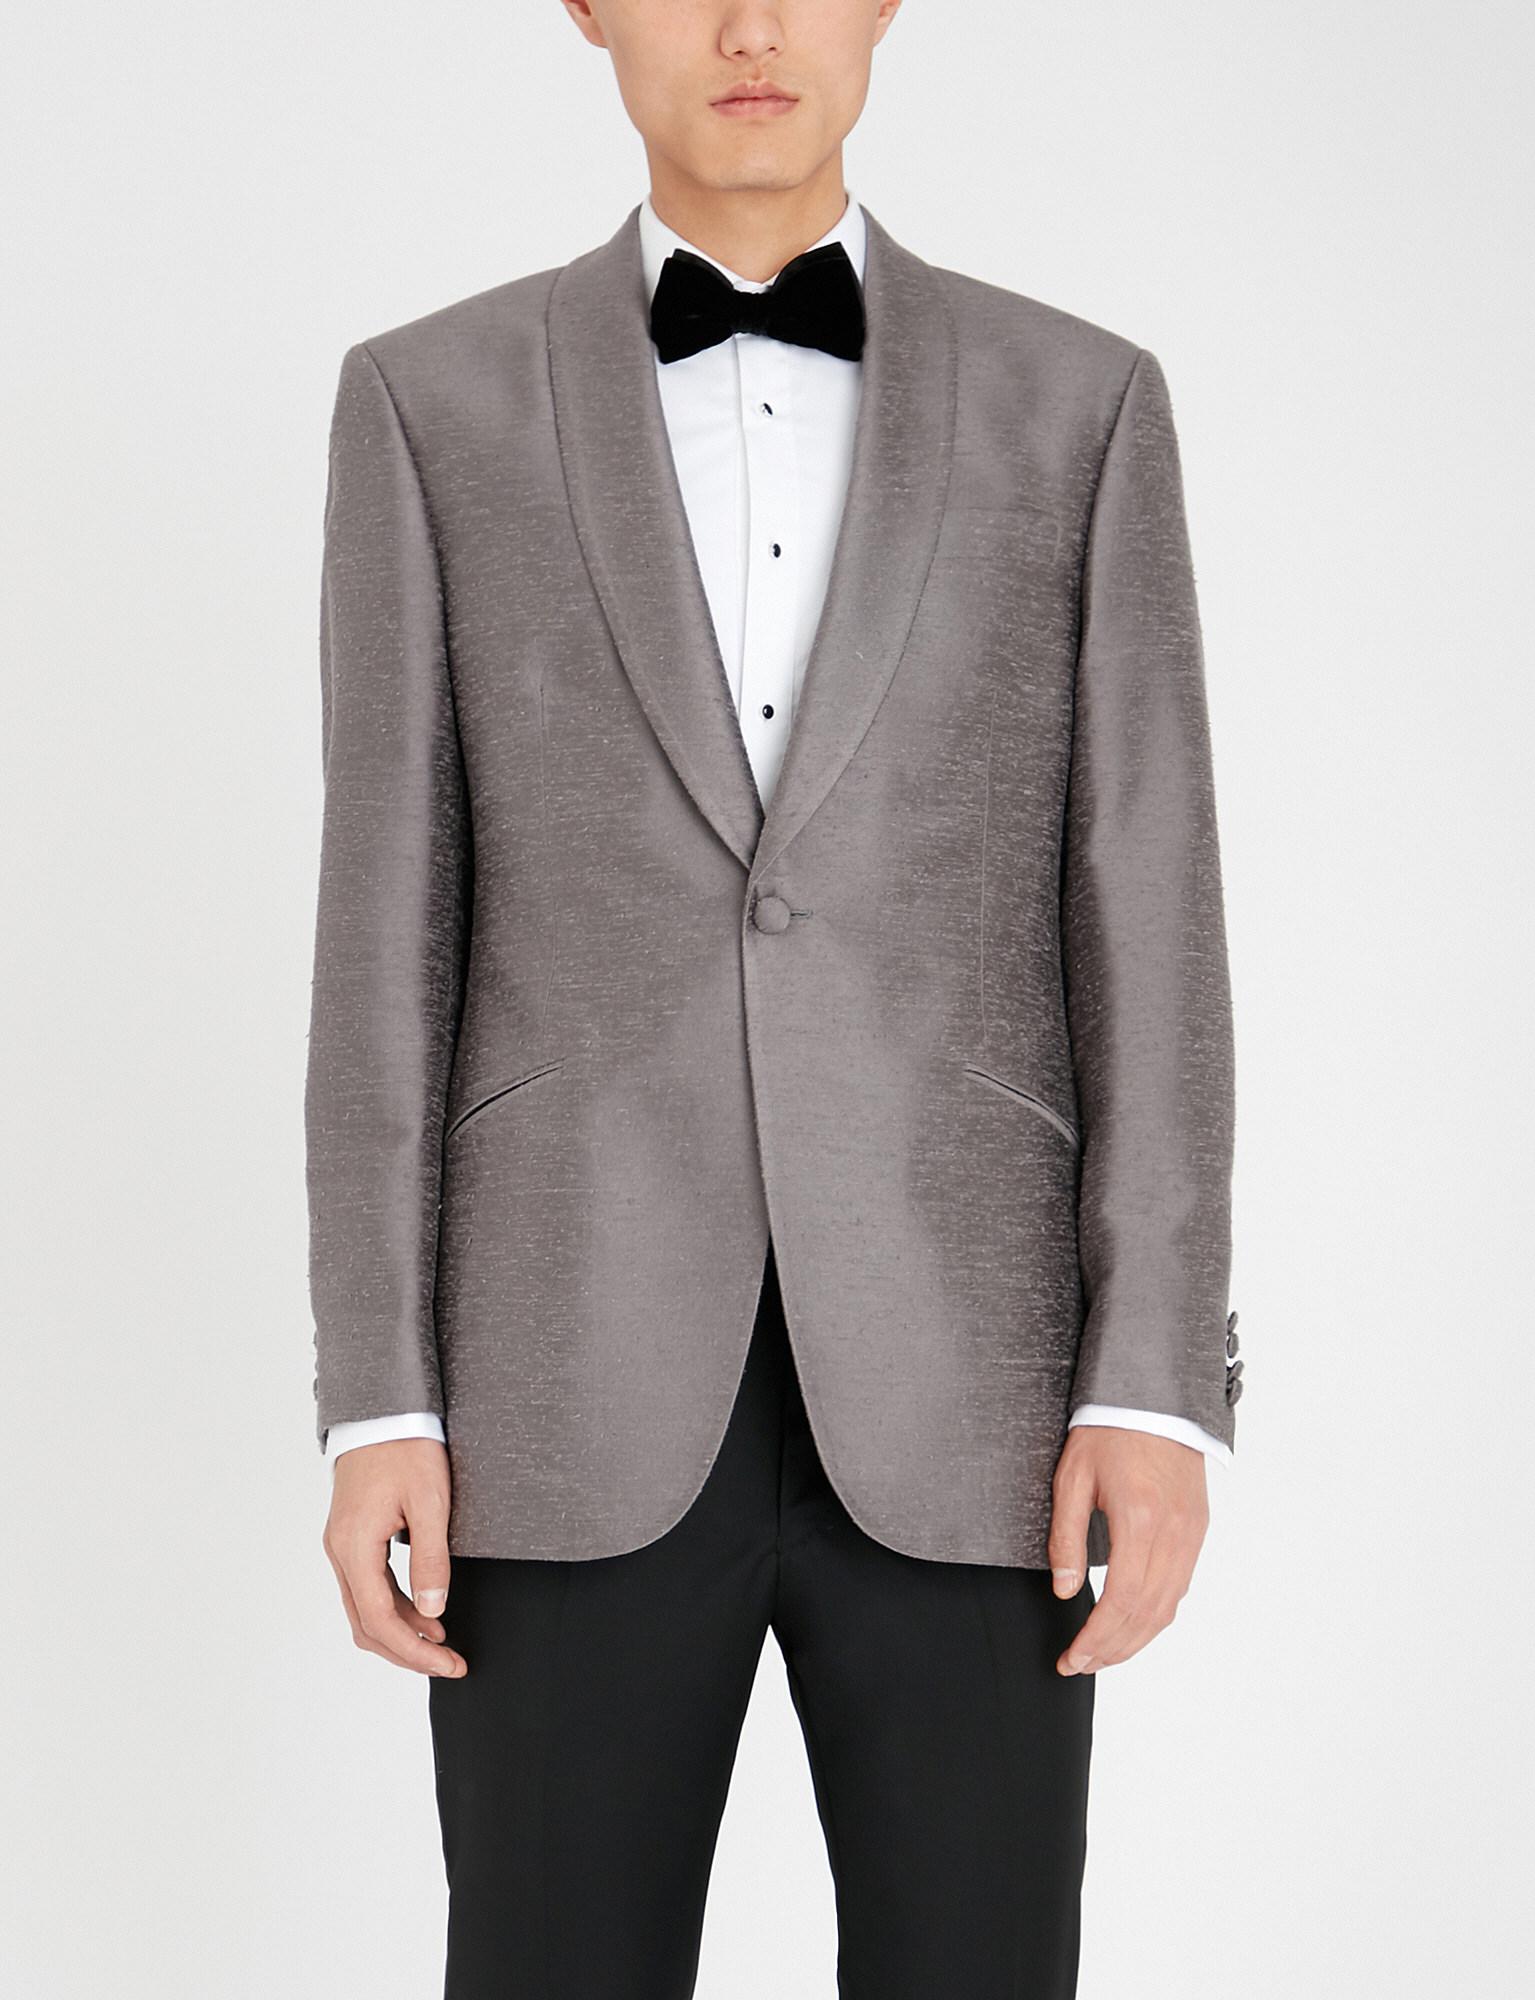 Lyst - Richard James Regular-fit Silk Tuxedo Jacket in Gray for Men